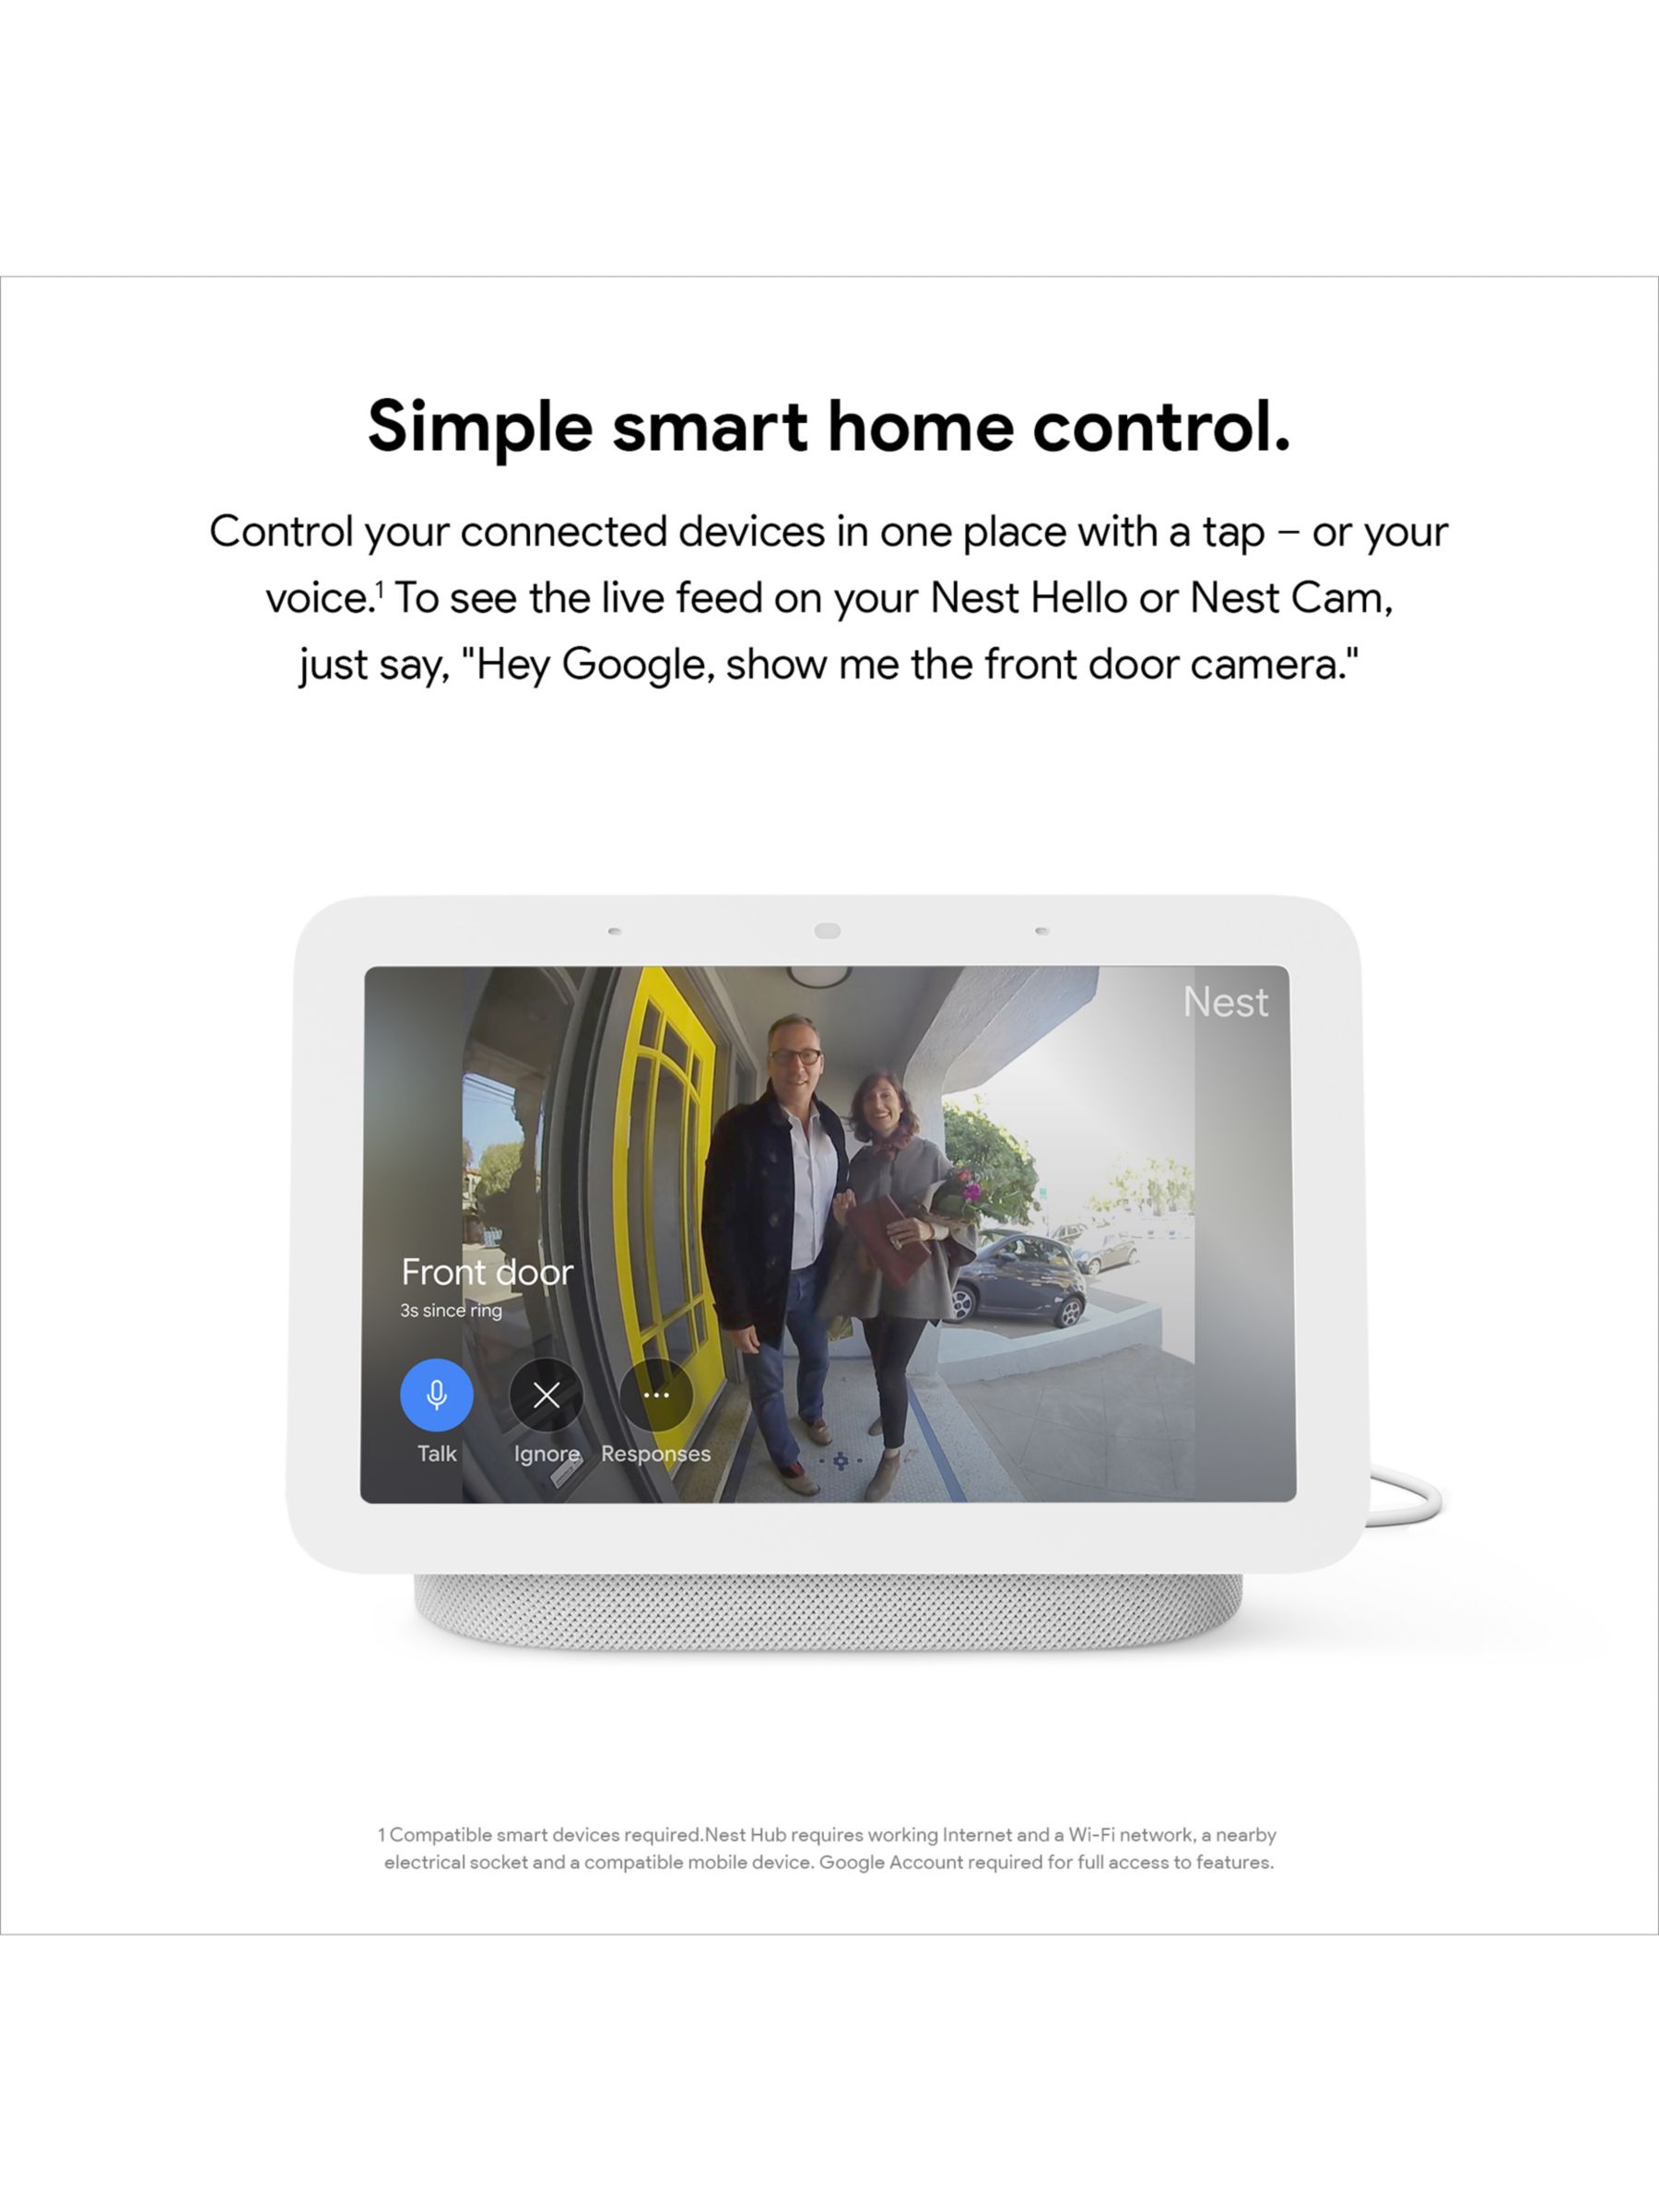 Google Nest Hub 2nd Gen. 7 Smart Display